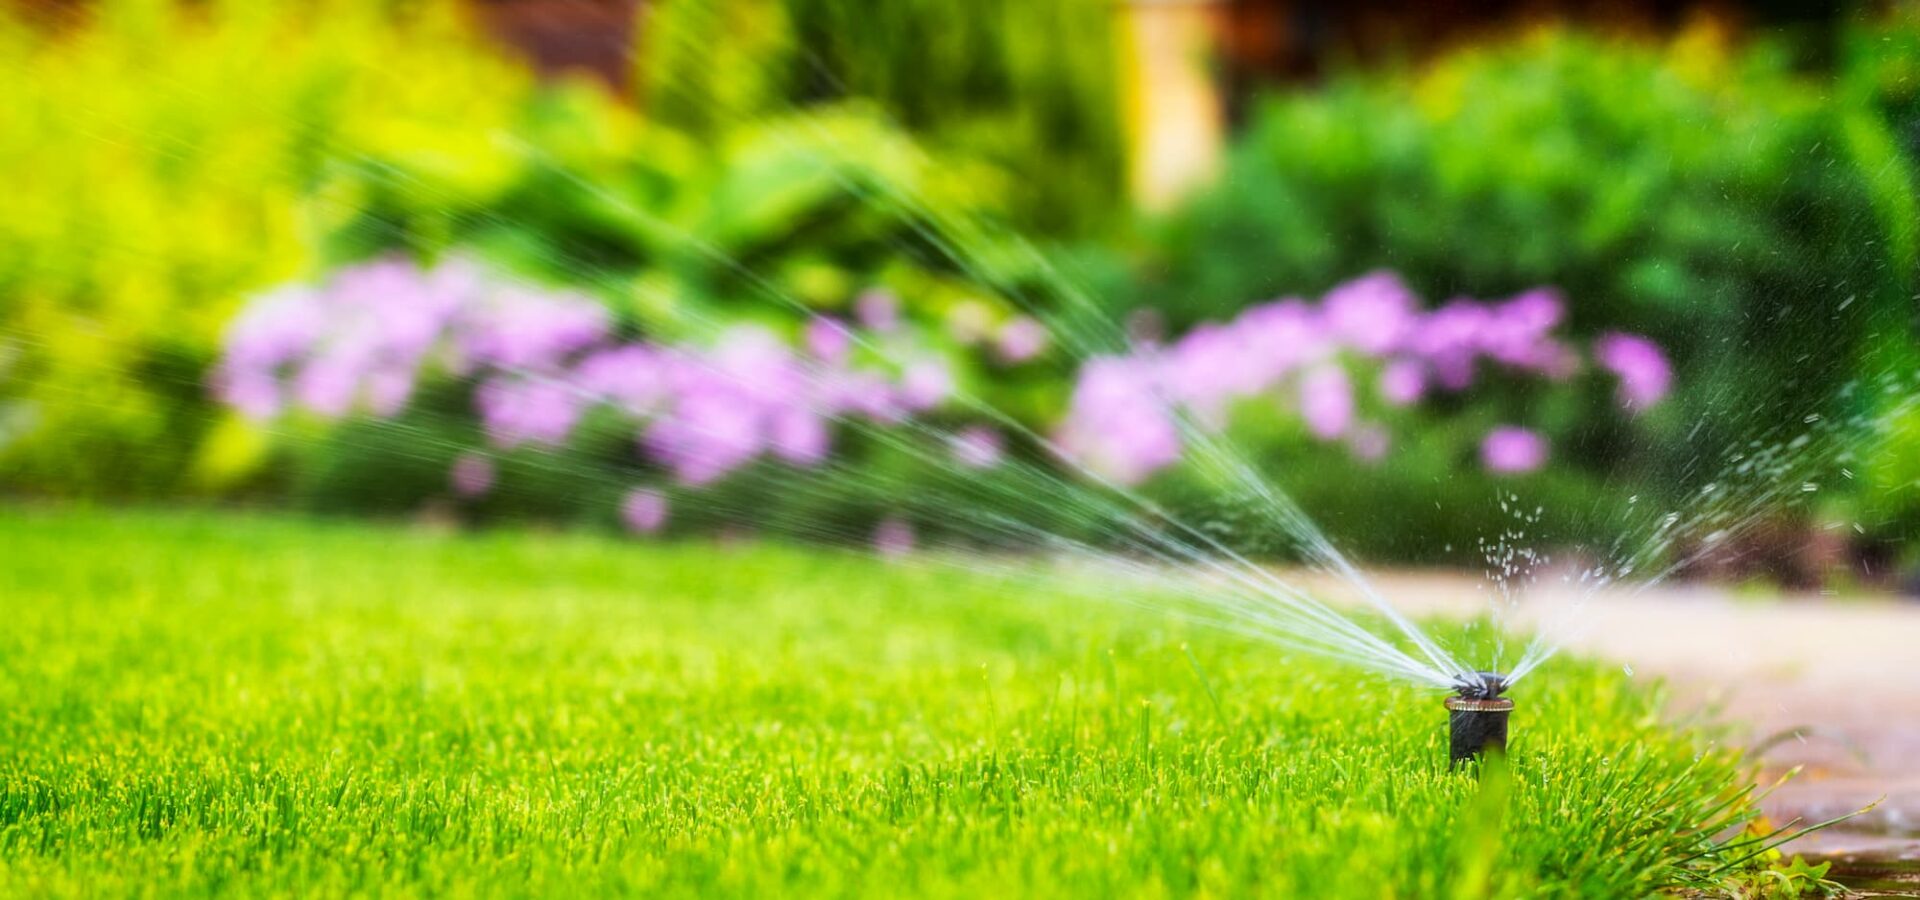 Greenway Irrigation Sprinkler On Lawn